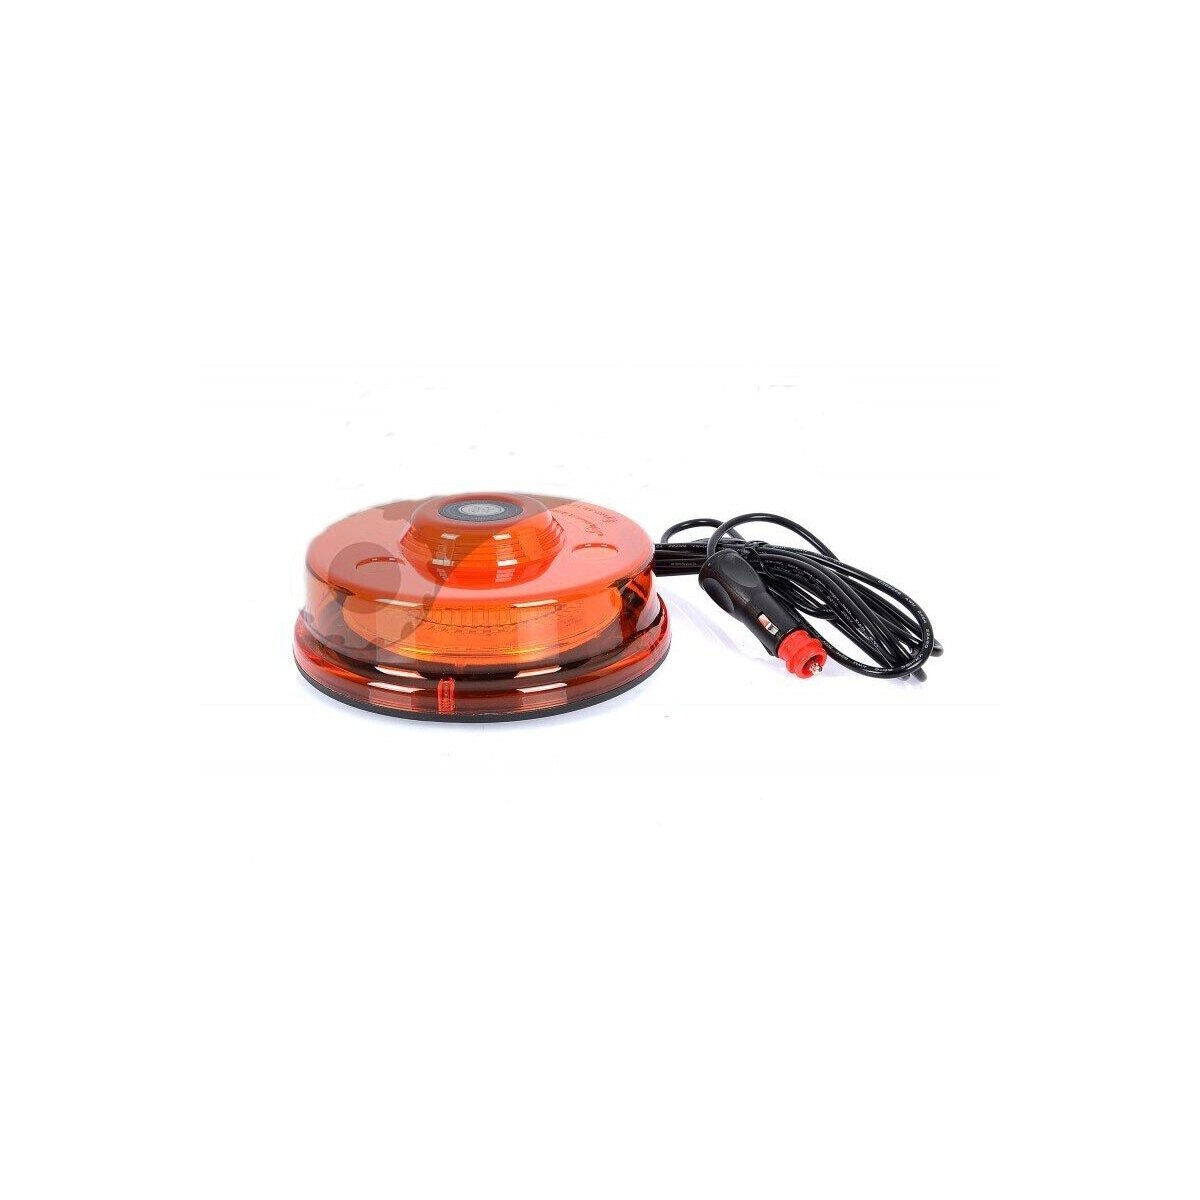 Lampeggiante LED Arancione Magnetico Basso Girofaro 12V 24V